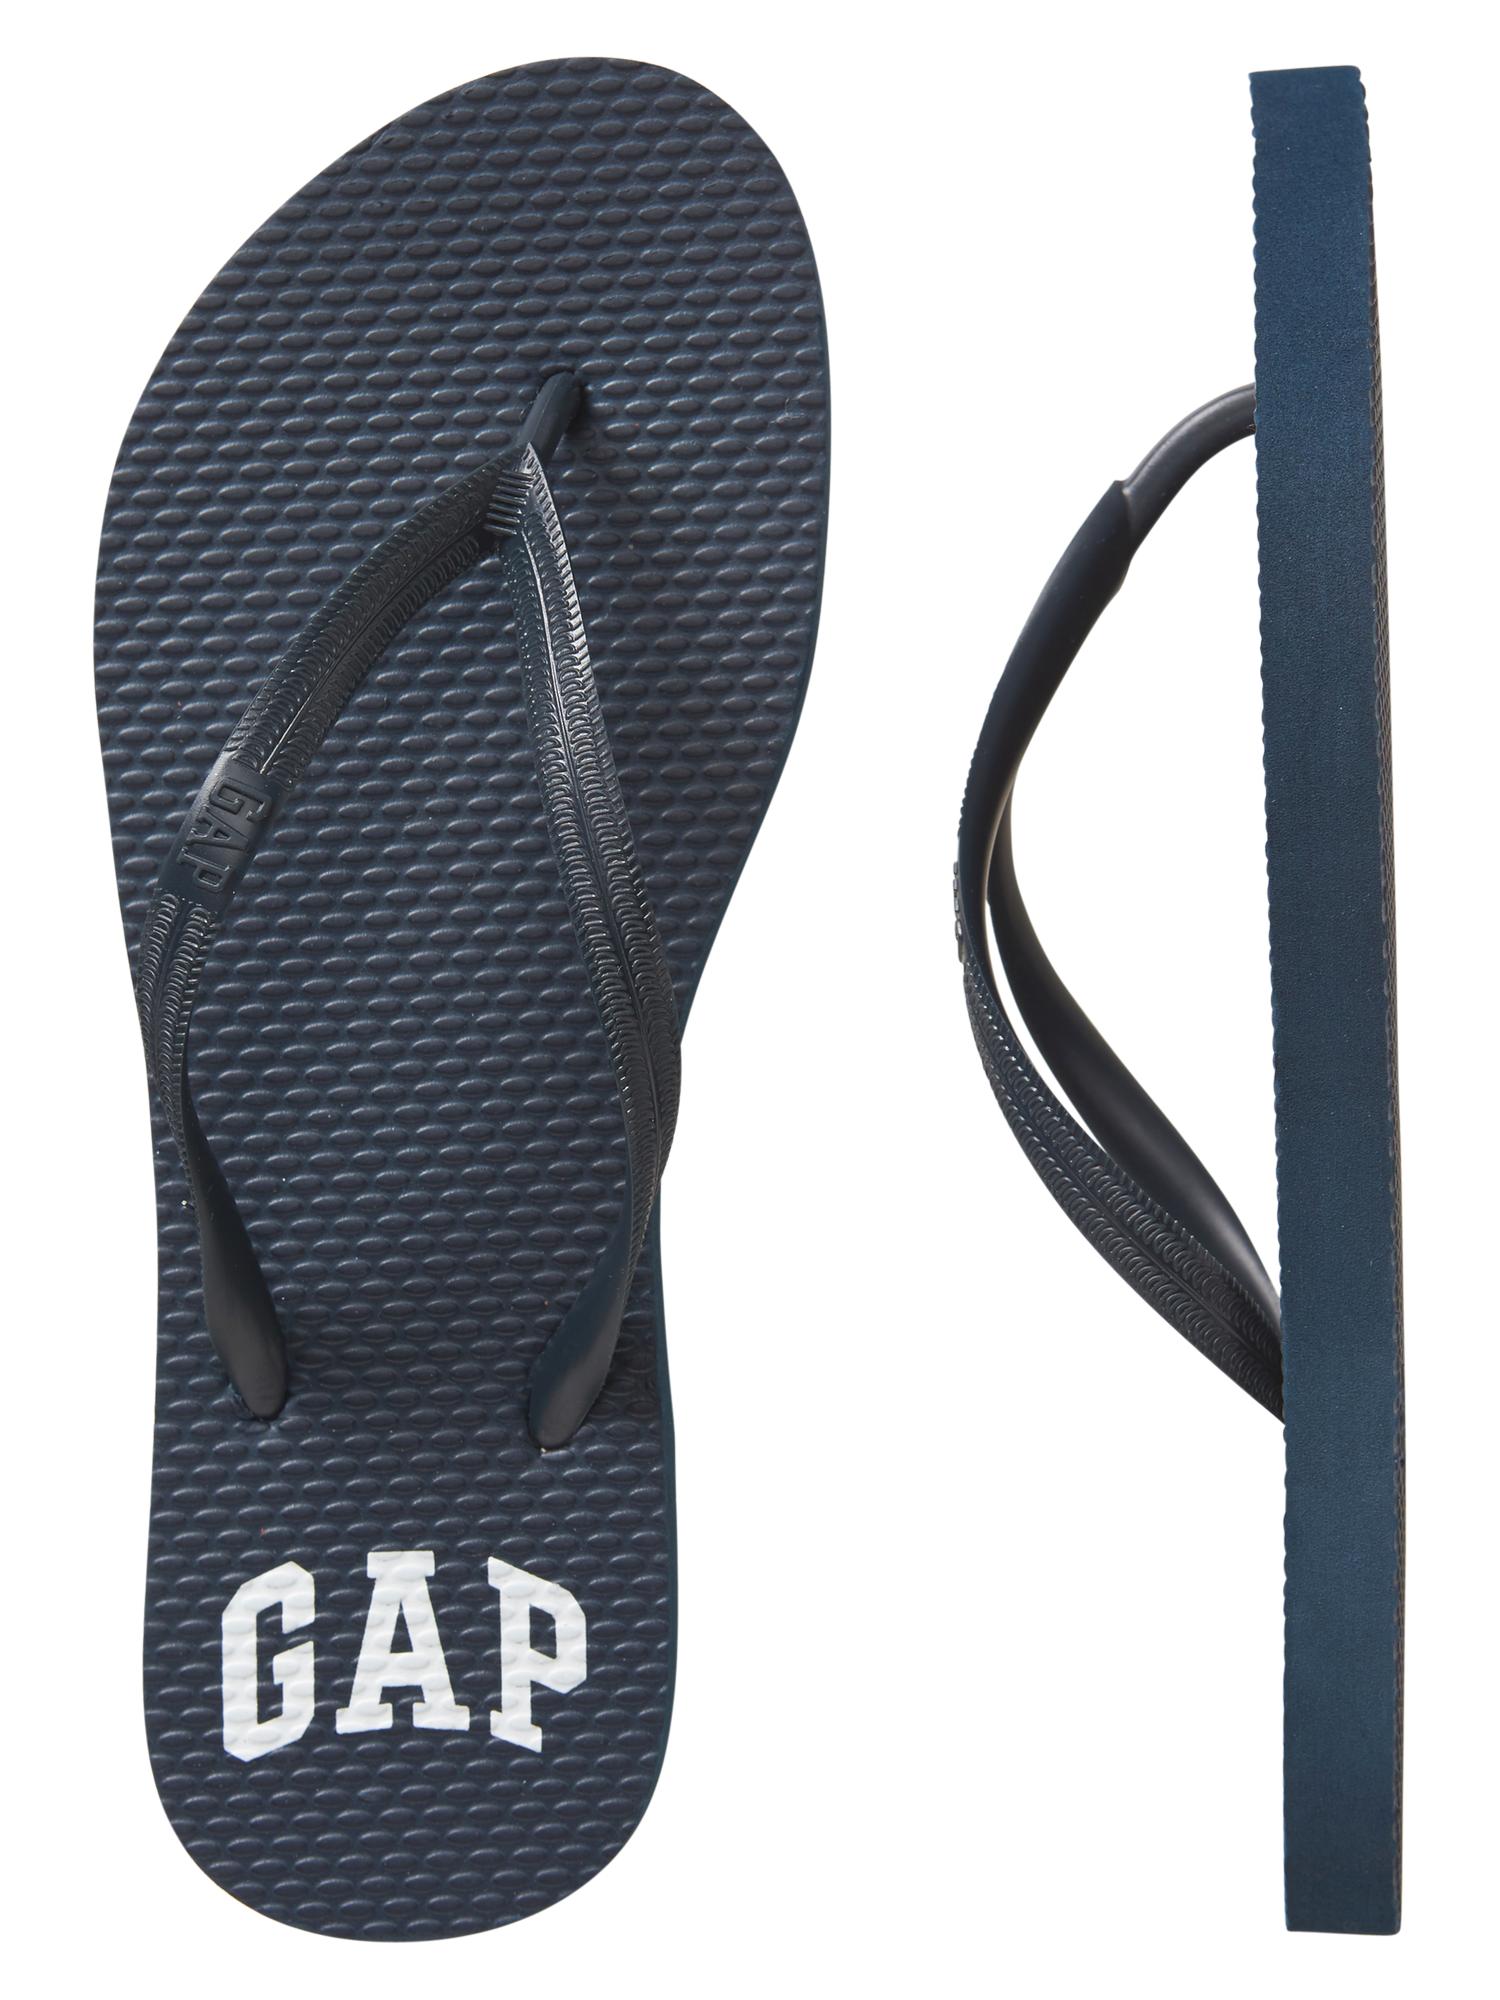 gap flip flop